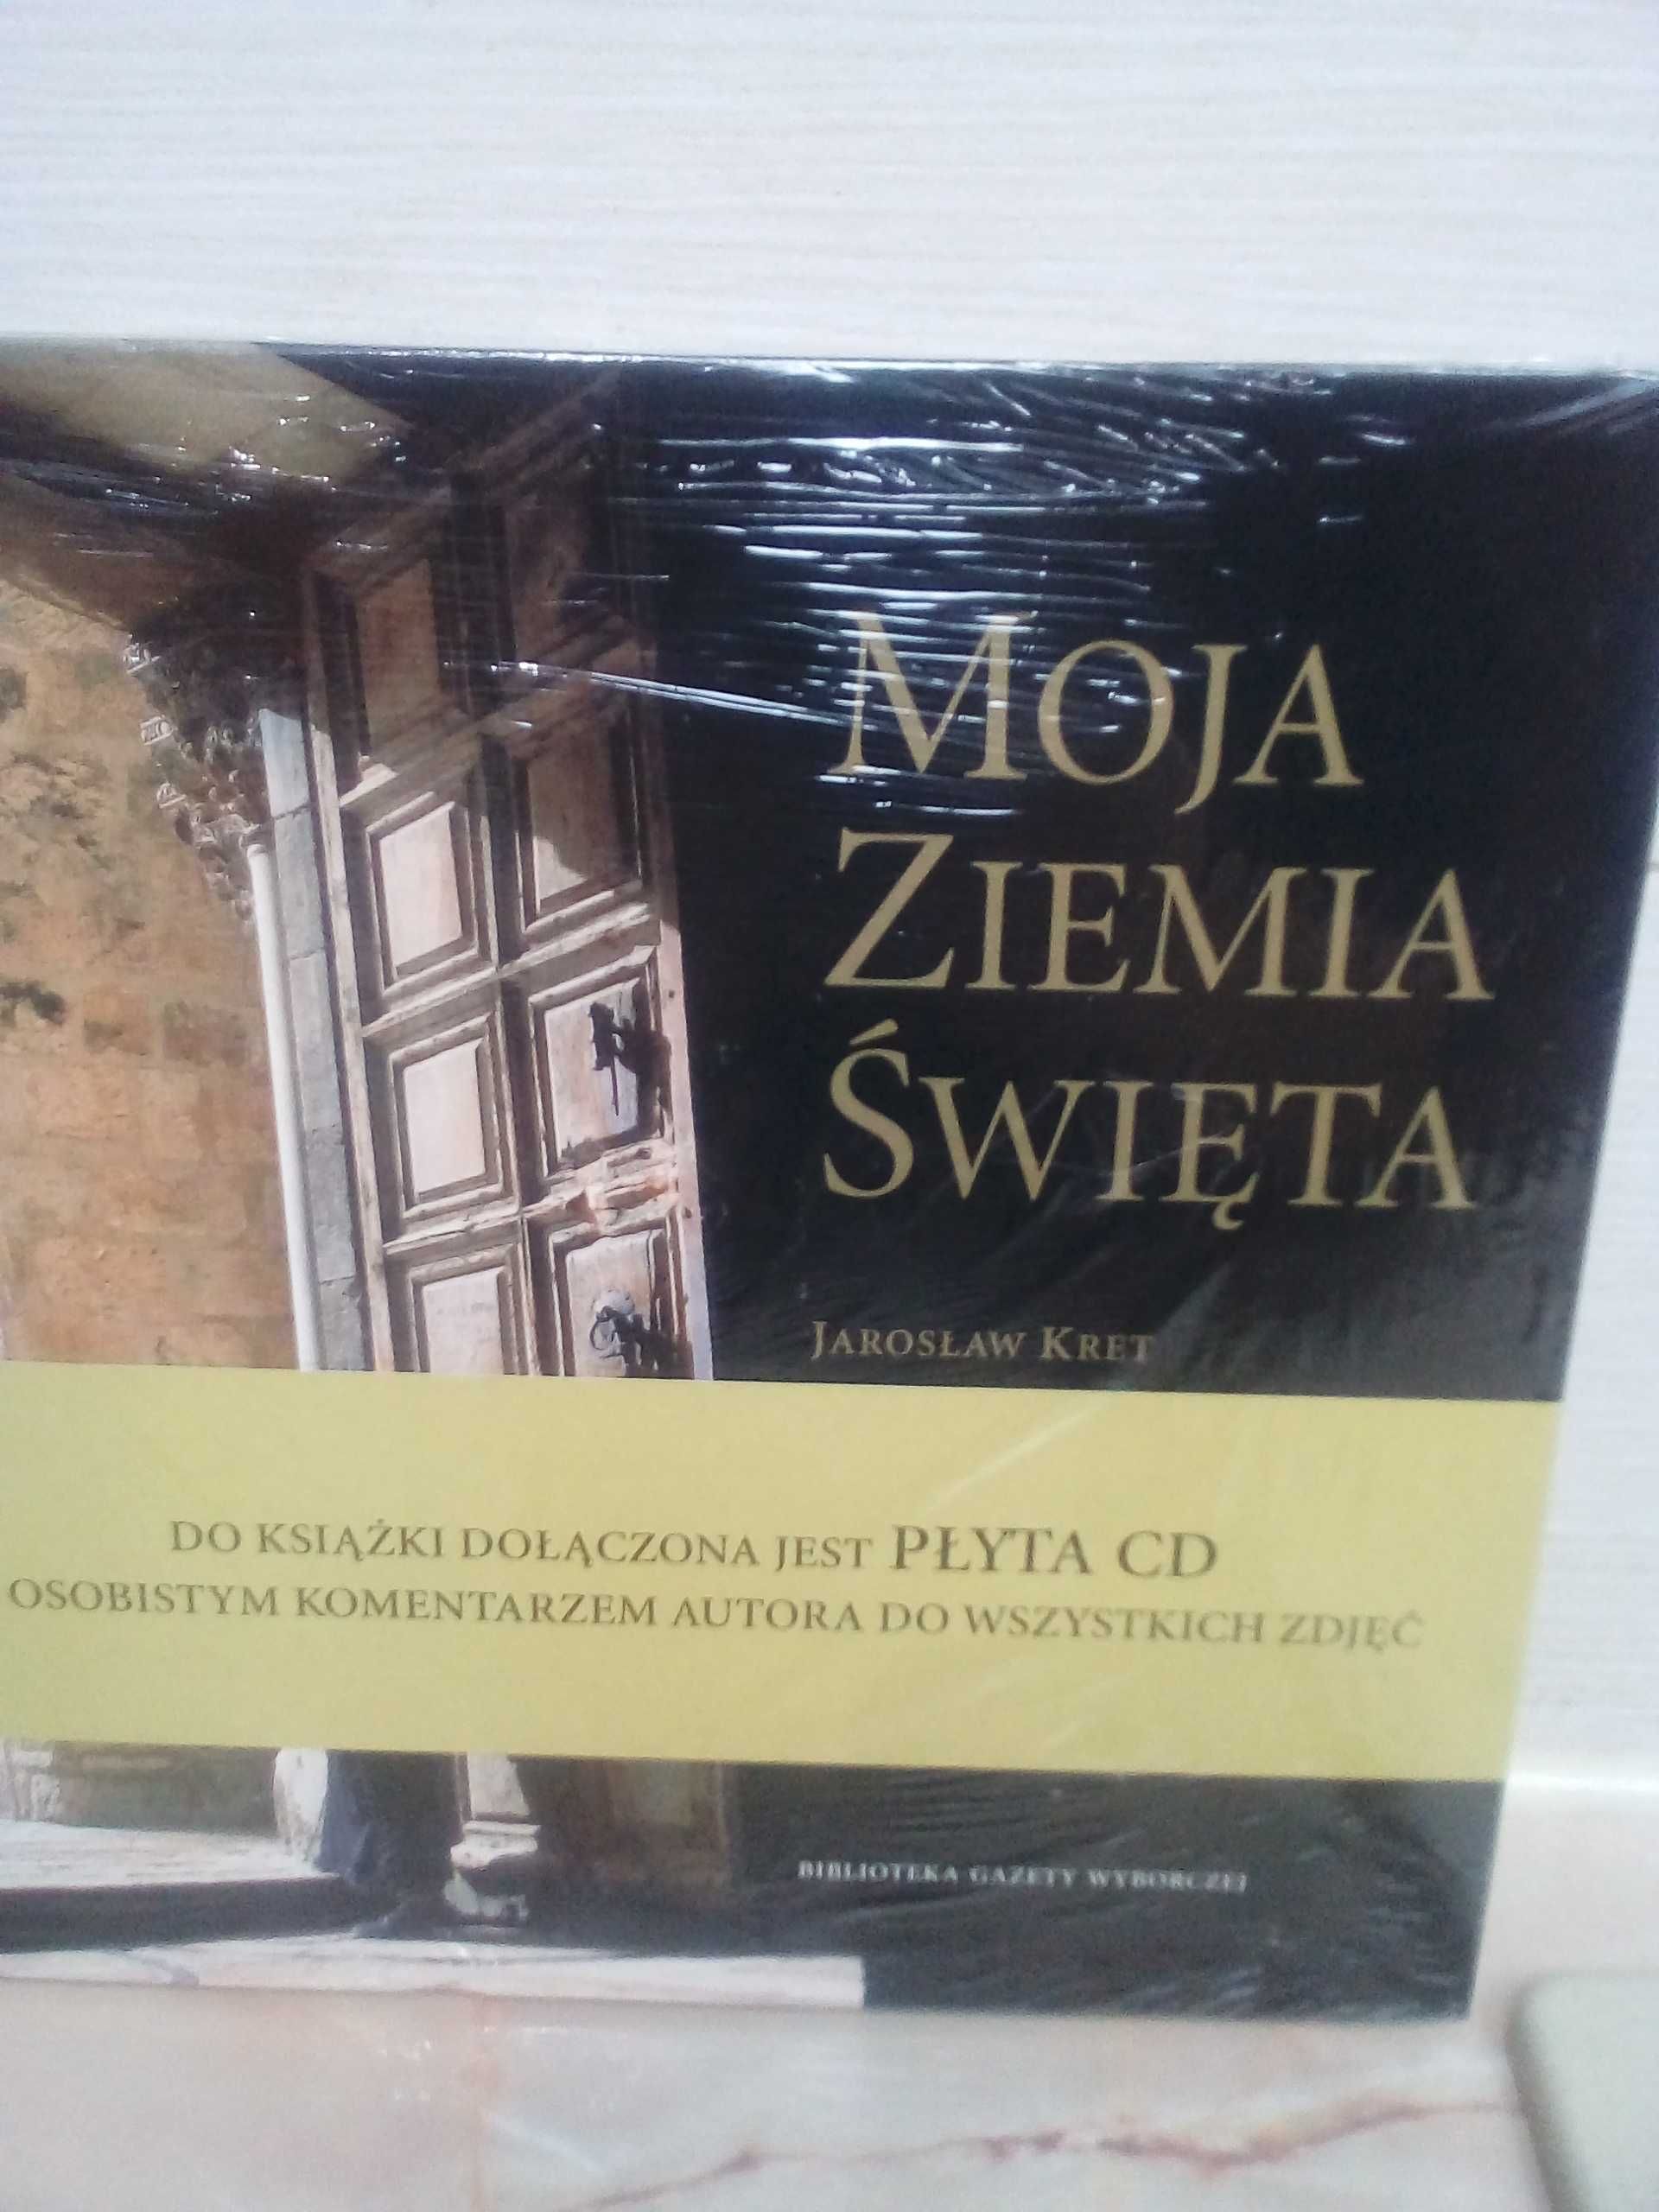 Książka JArosława Kreta - "Moja ziemia święta"